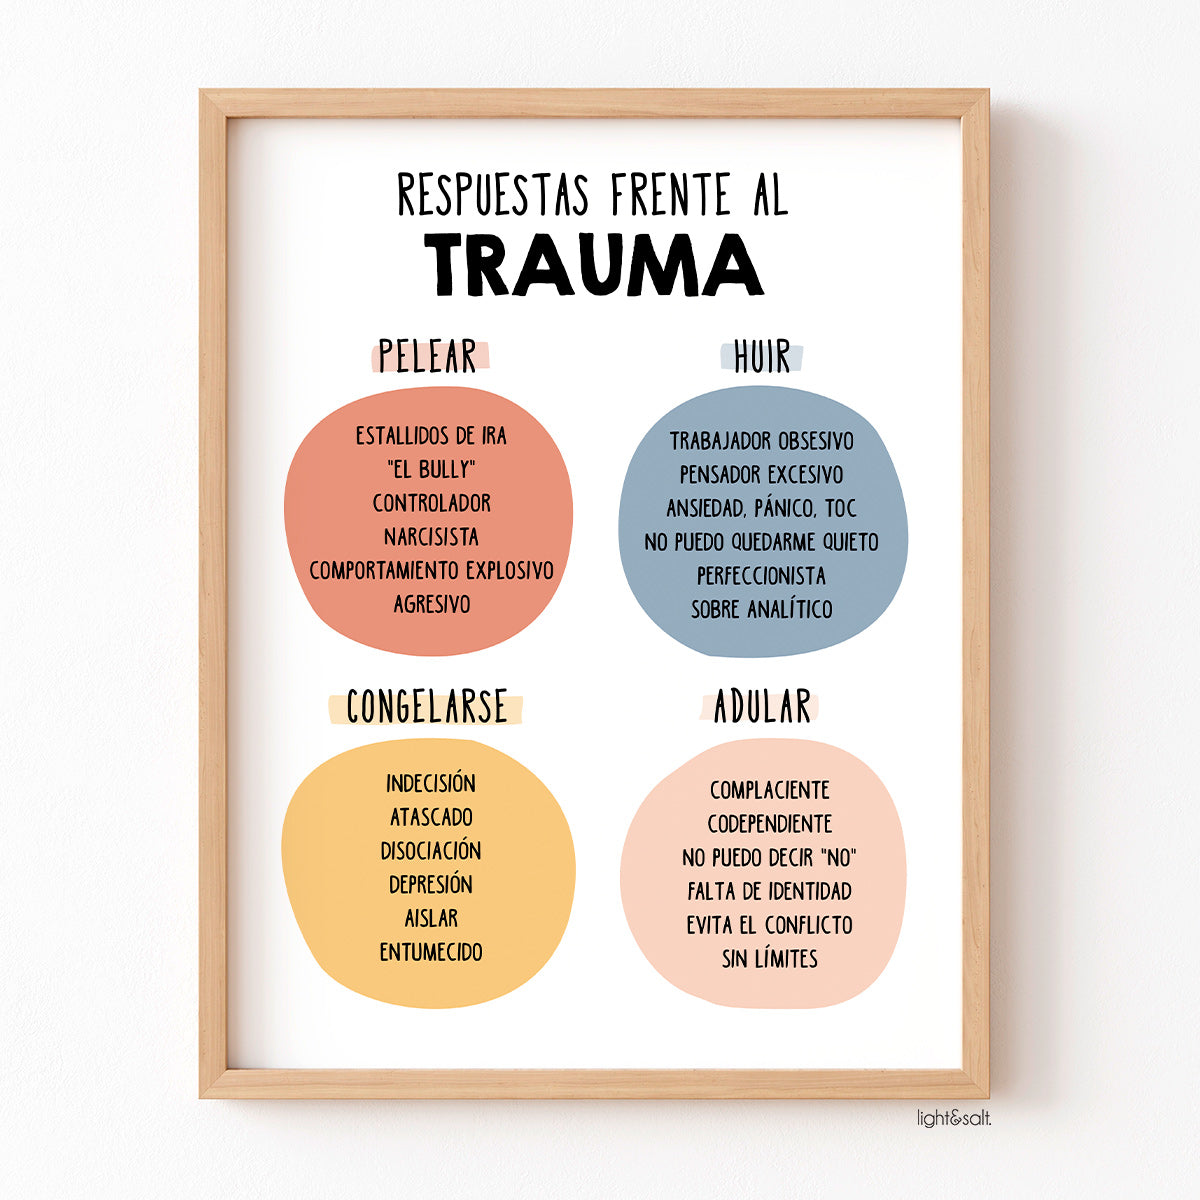 Spanish Trauma responses poster